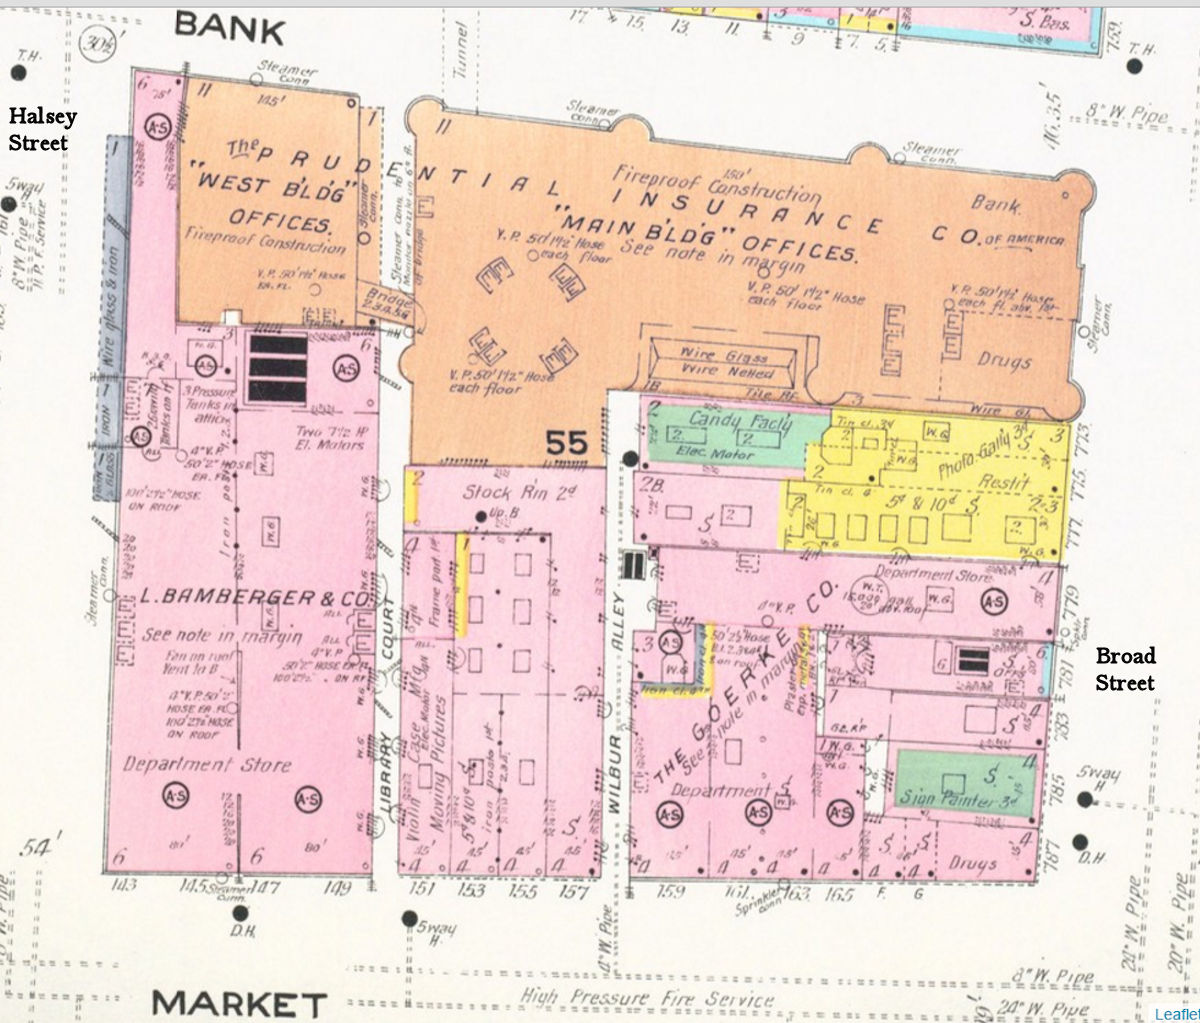 1908 Map
143-149 Market Street
